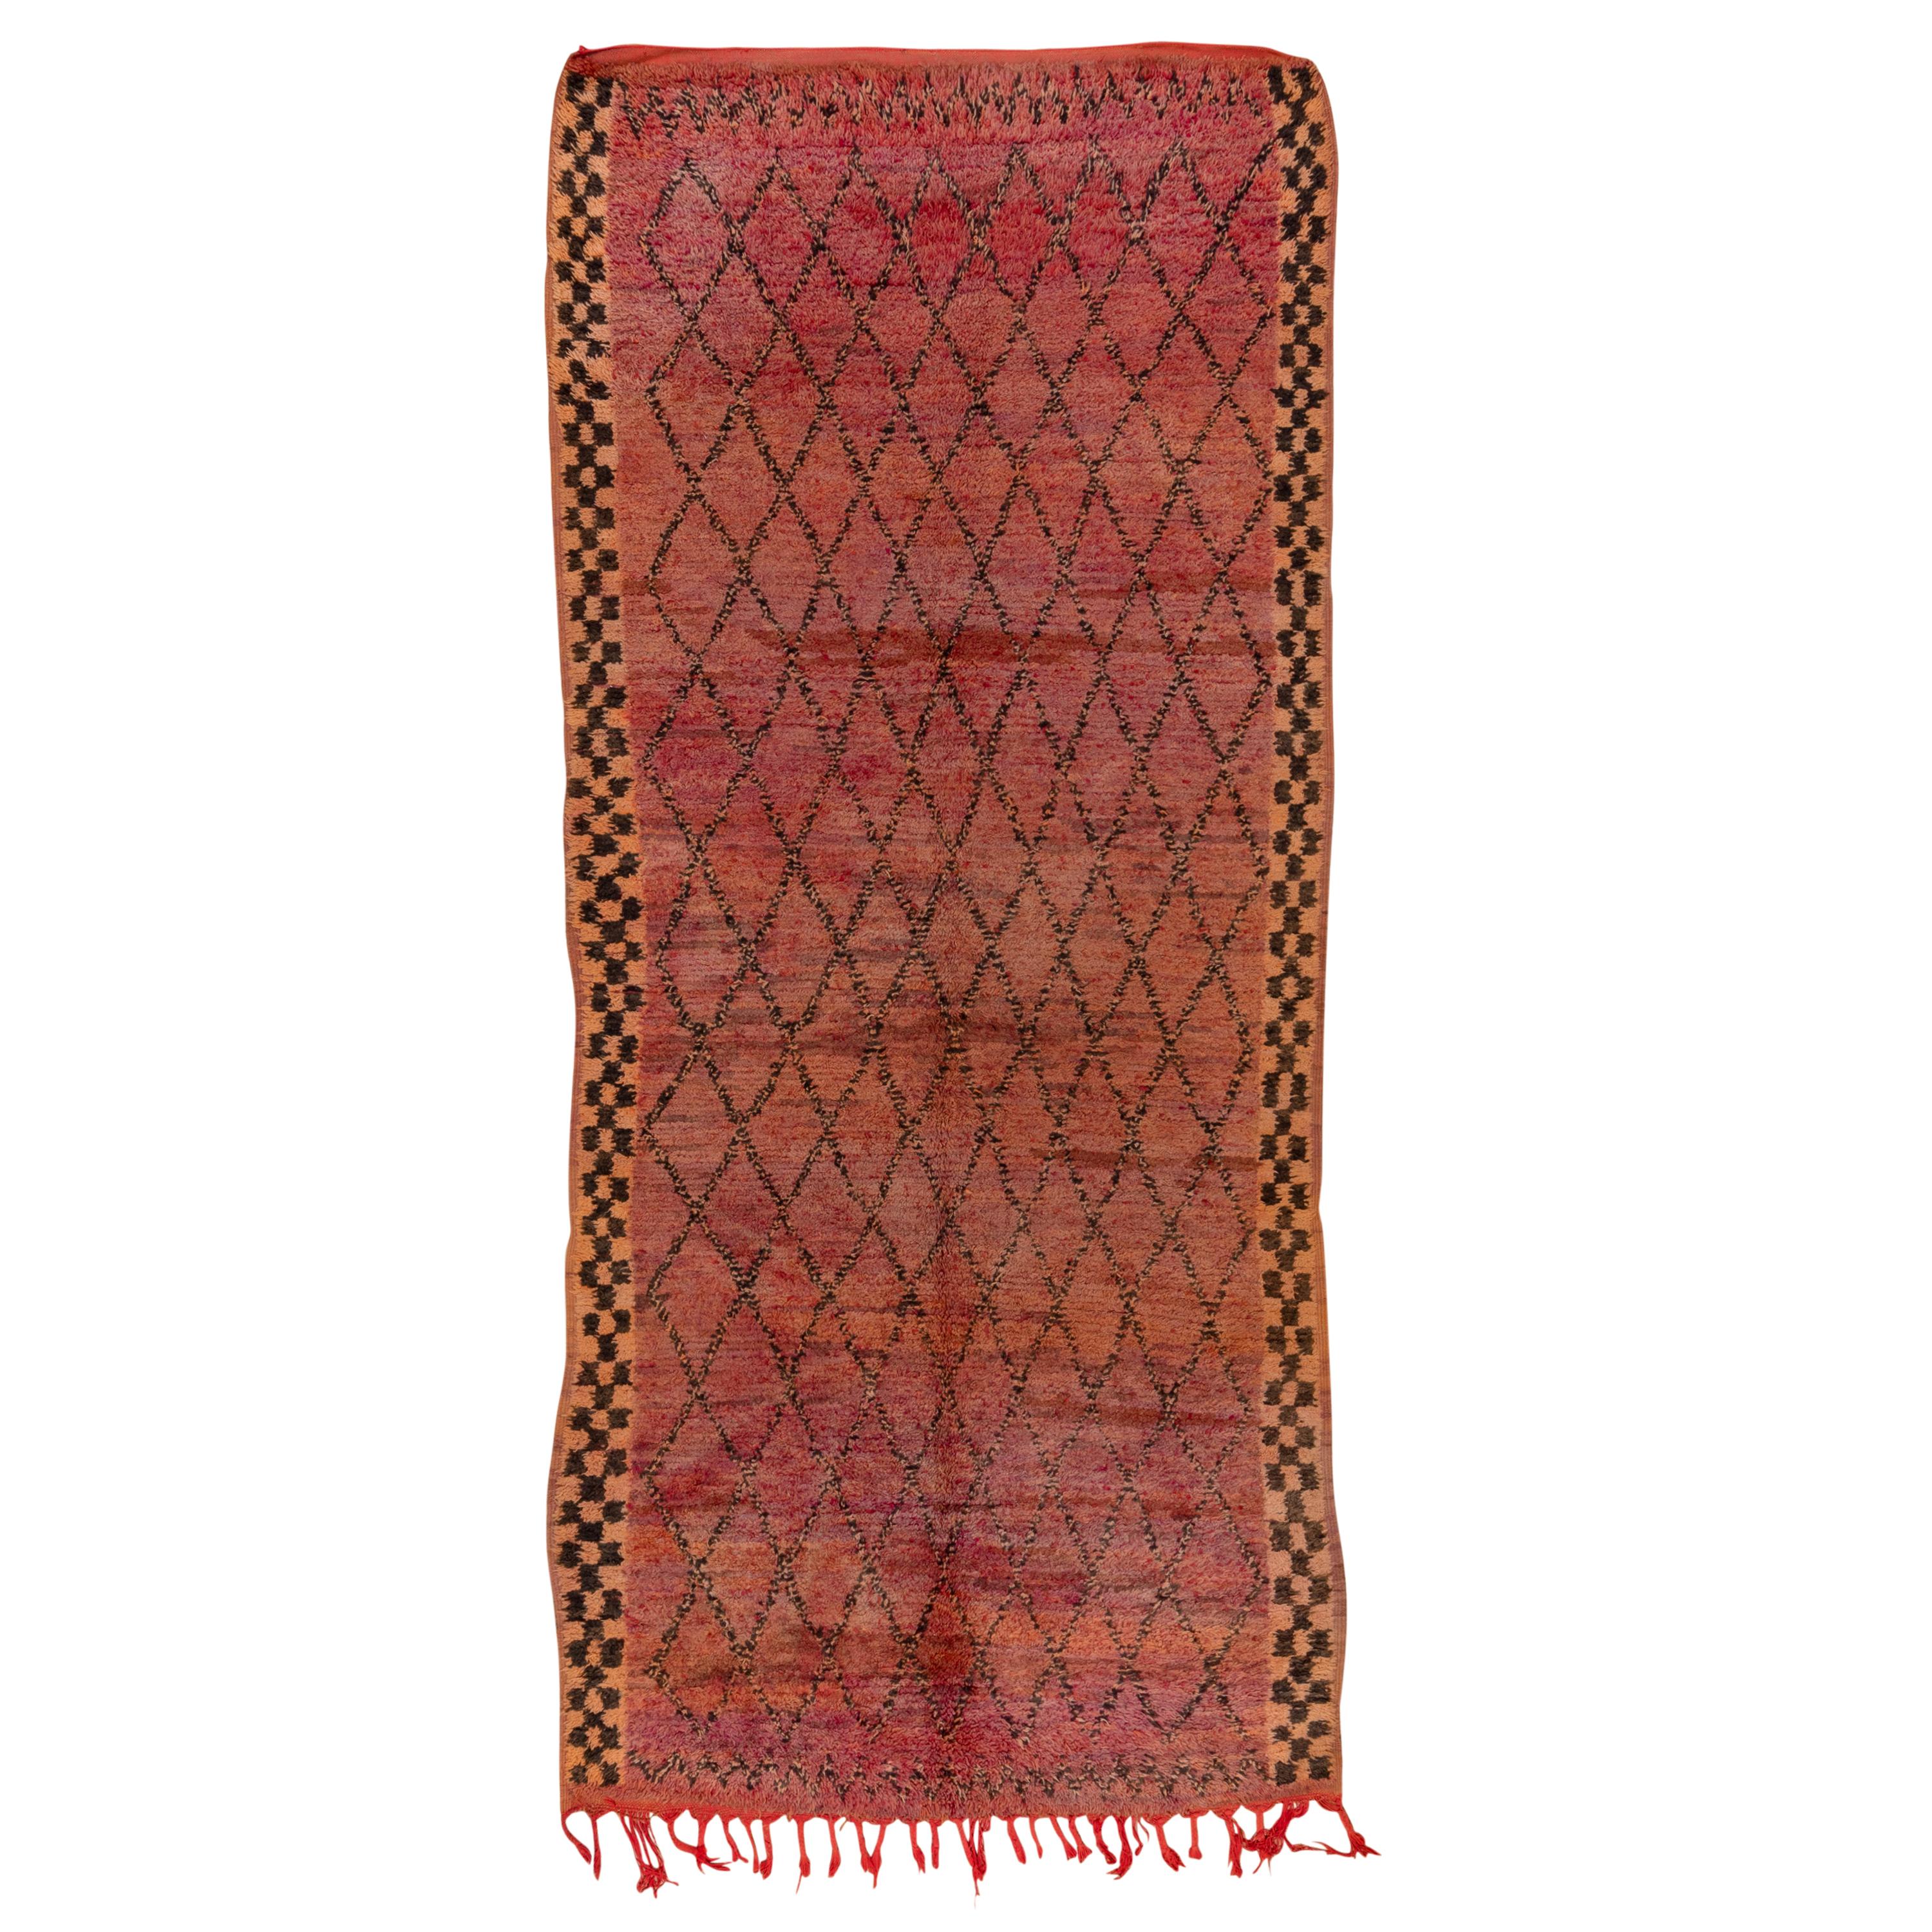 Vintage Moroccan Gallery Carpet, circa 1940s, Purple Field, Plaid Borders For Sale